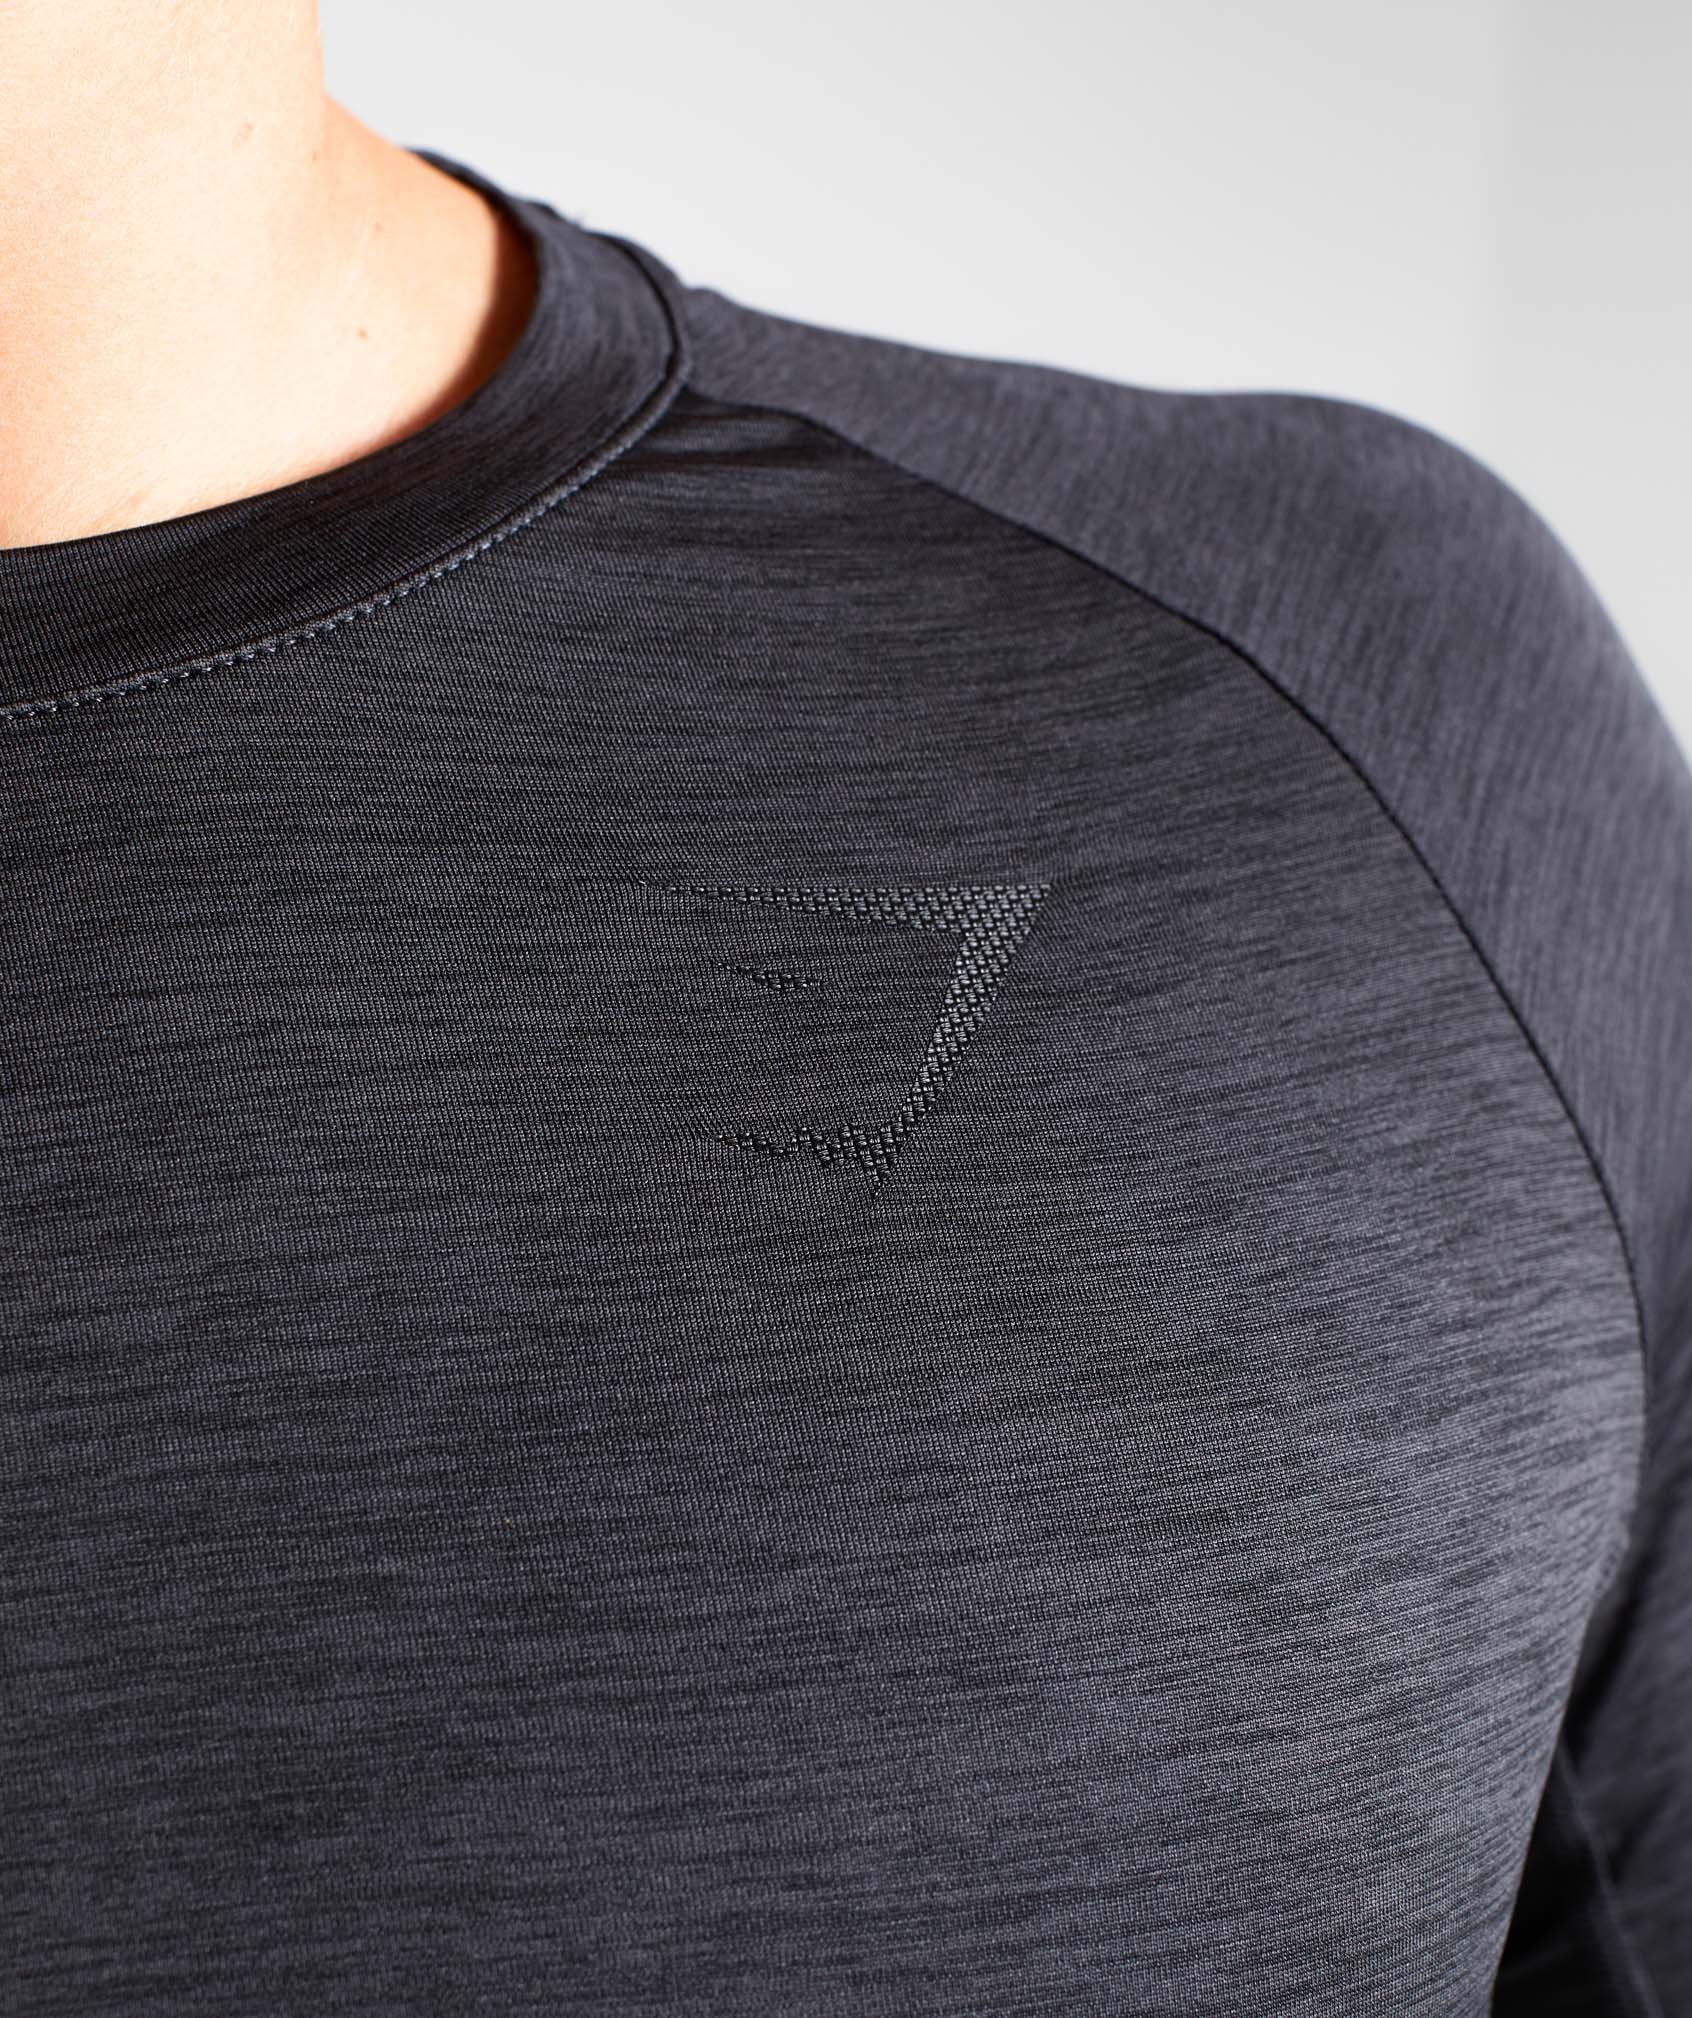 Vertex Long Sleeve T-Shirt in Black Marl - view 5